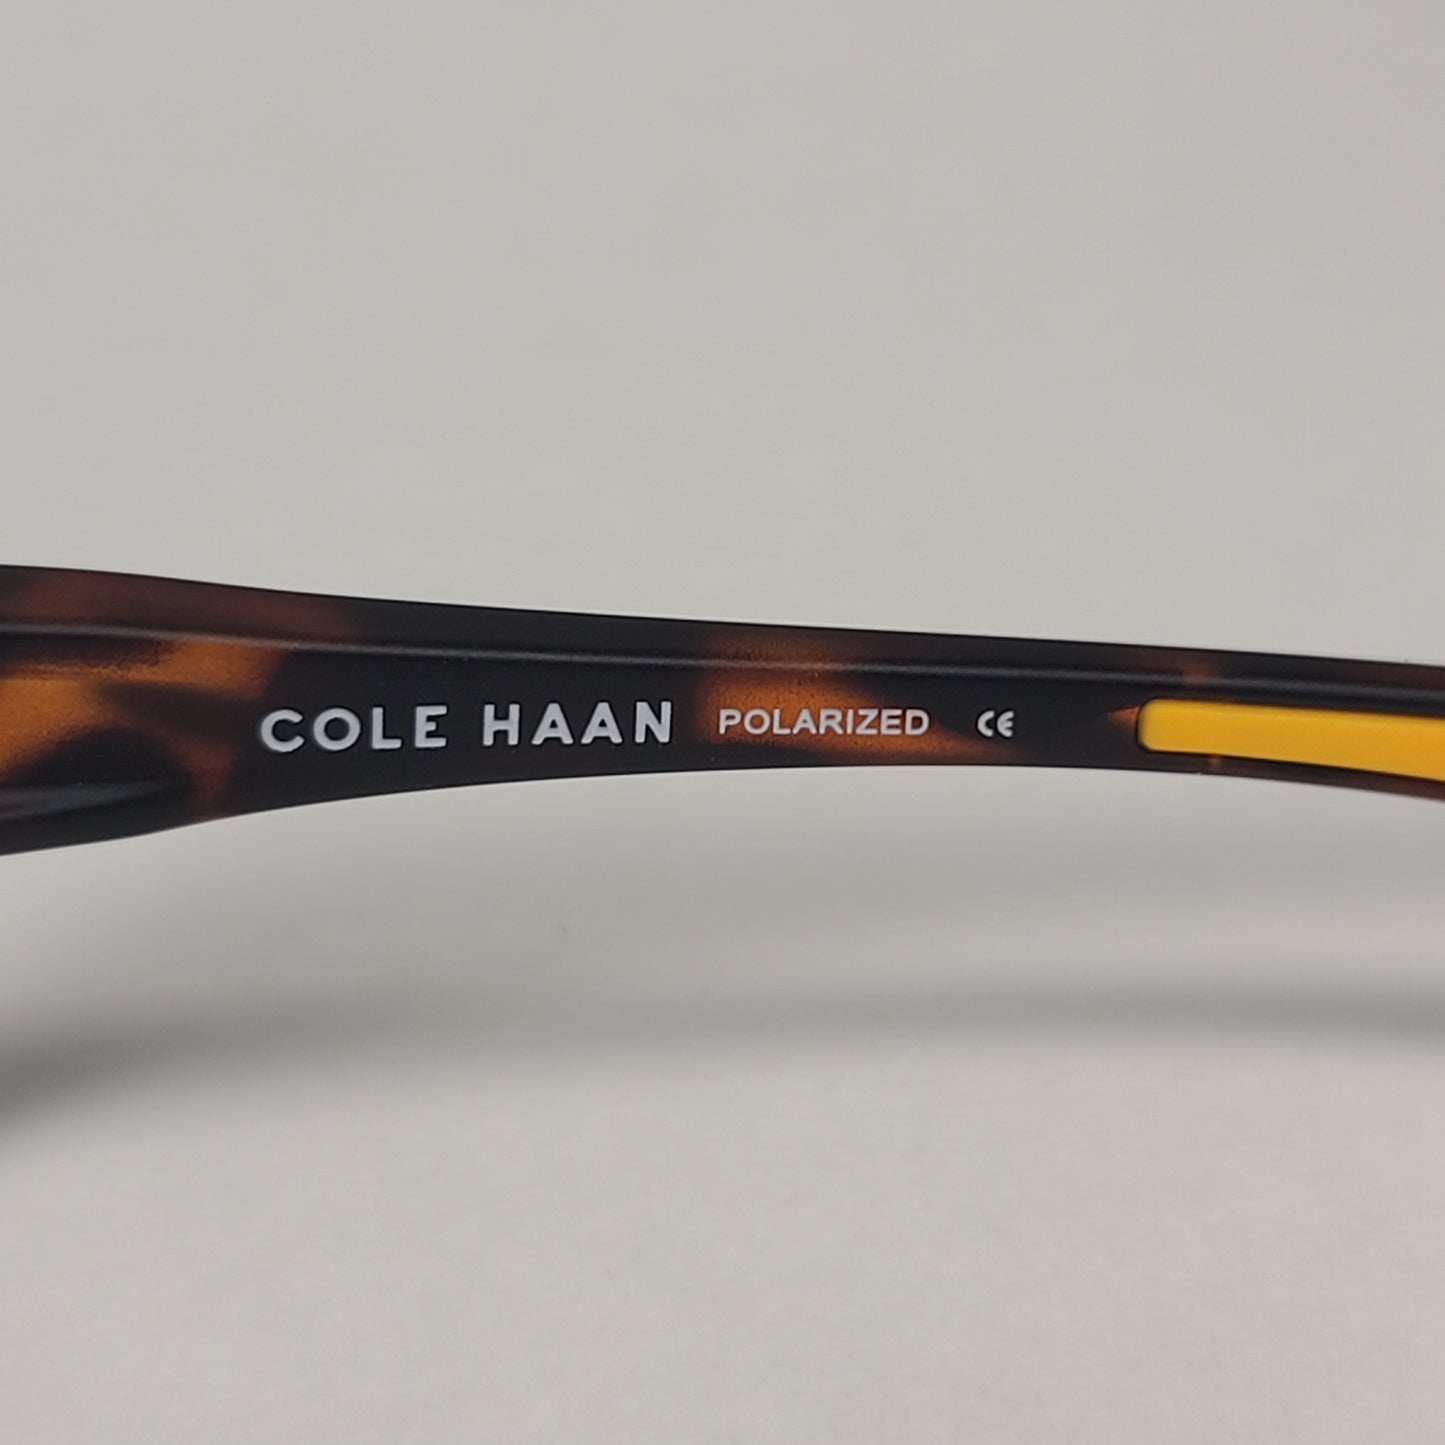 Cole Haan CH8024 215 TORTOISE Polarized Wrap Sunglasses Brown Tortoise Frame Brown Lens - Sunglasses